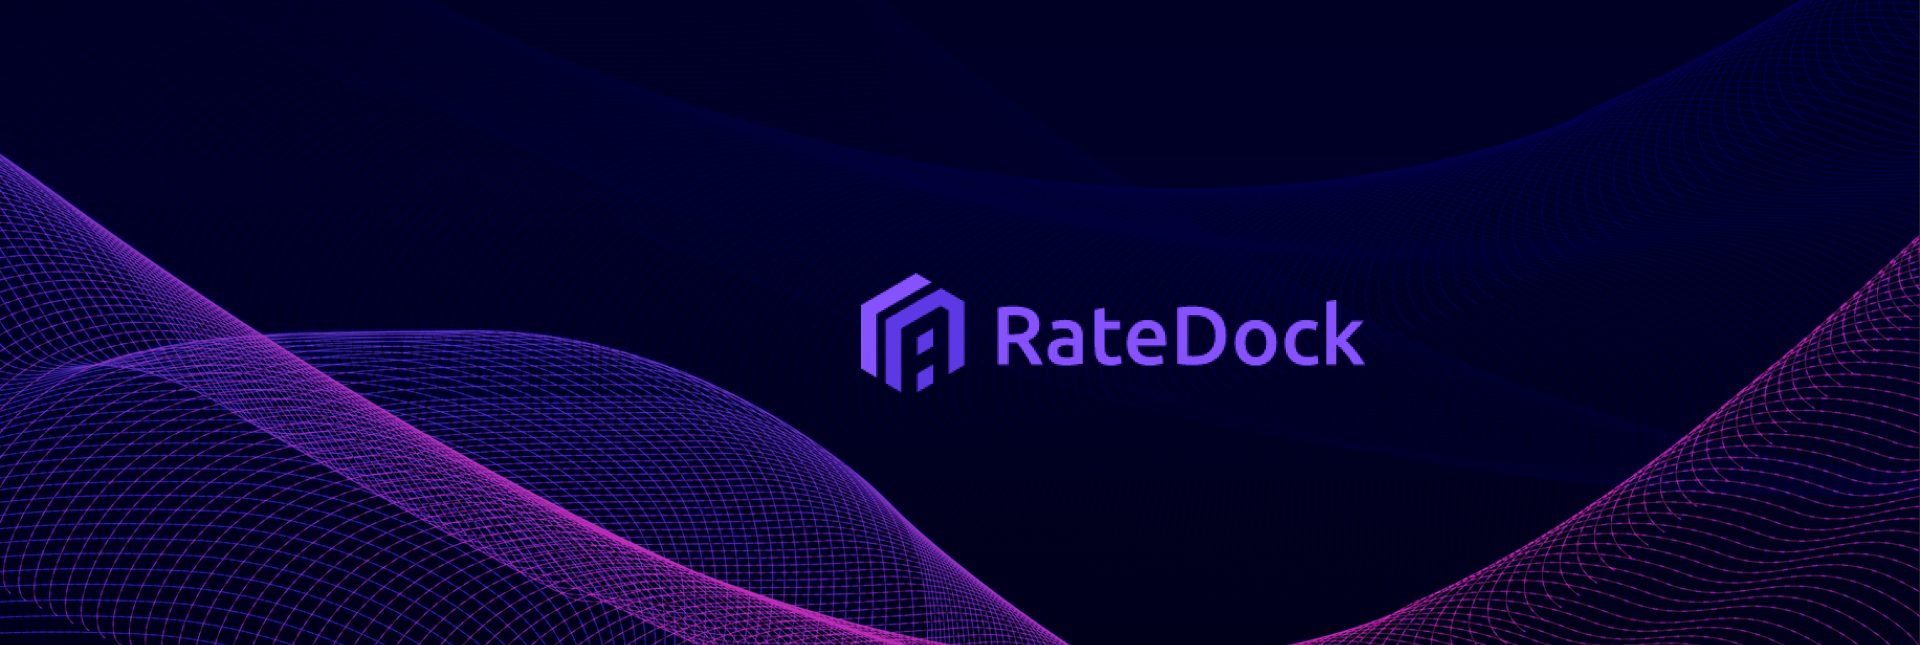 RateDock & GP Solutions Partnership